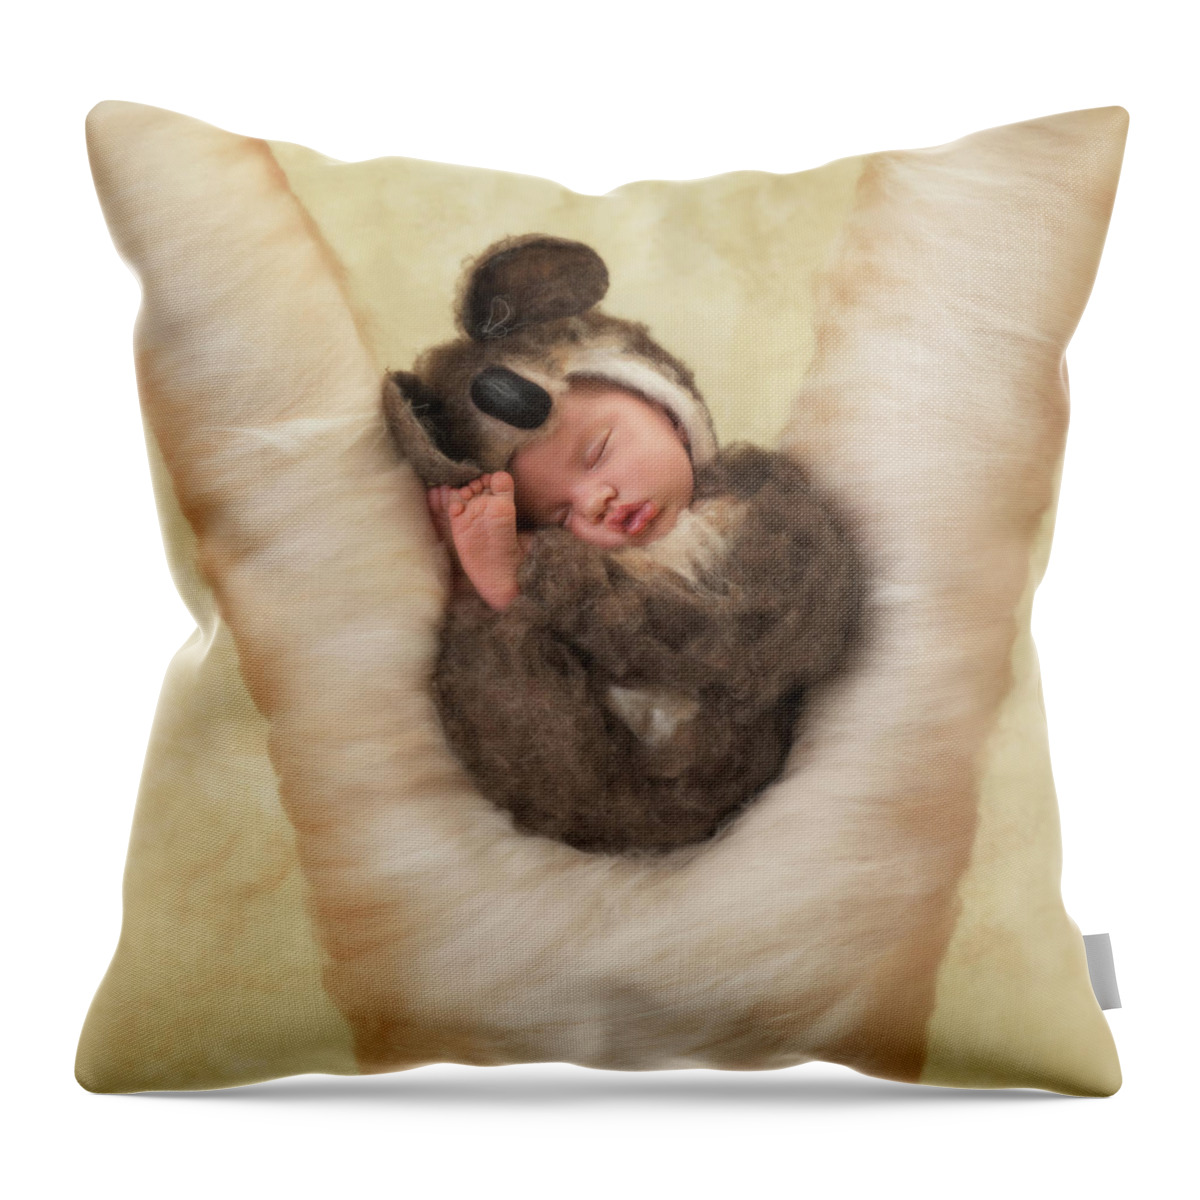 Koala Throw Pillow featuring the photograph Sleeping Koala by Anne Geddes